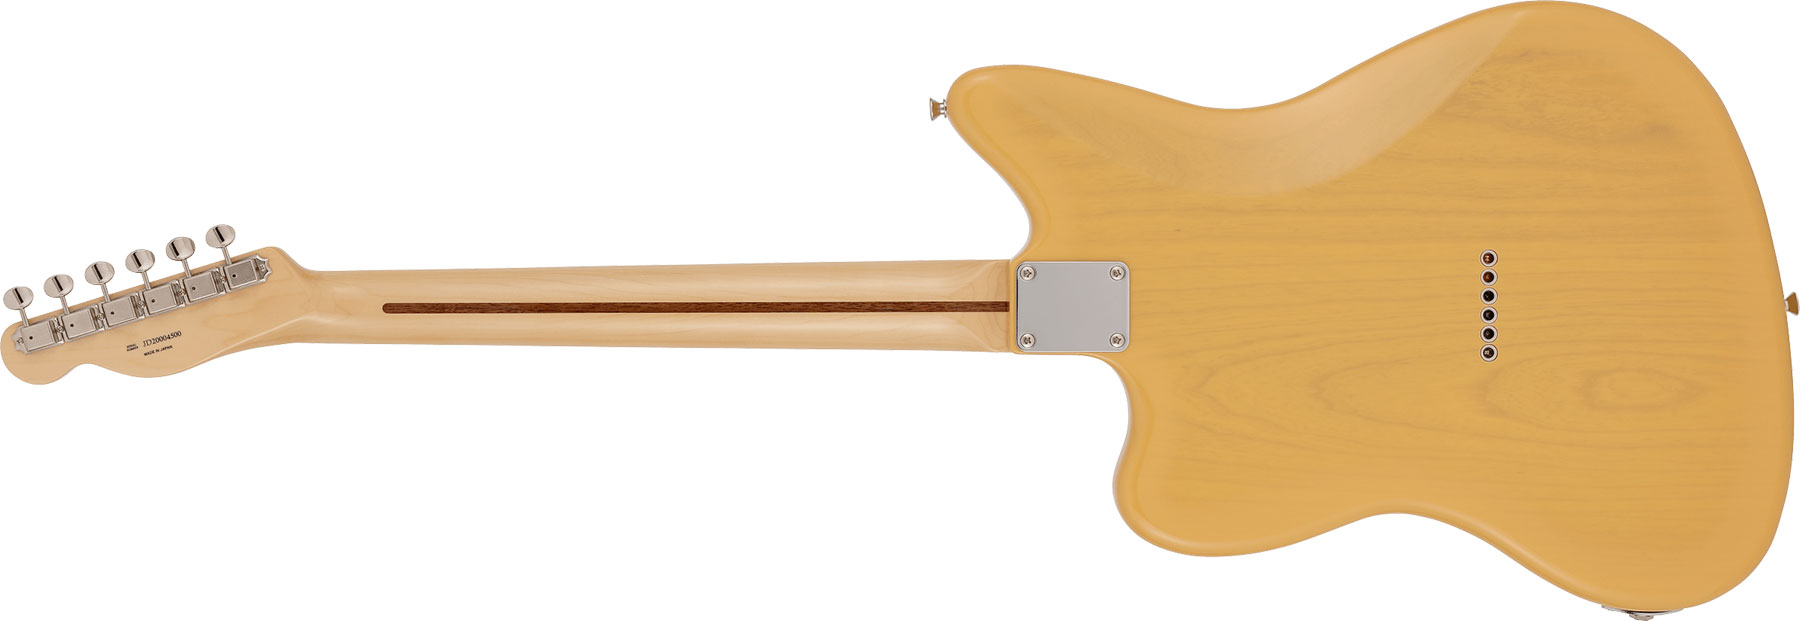 Fender Tele Offset Ltd Jap 2s Ht Mn - Butterscotch Blonde - Retro-rock elektrische gitaar - Variation 1